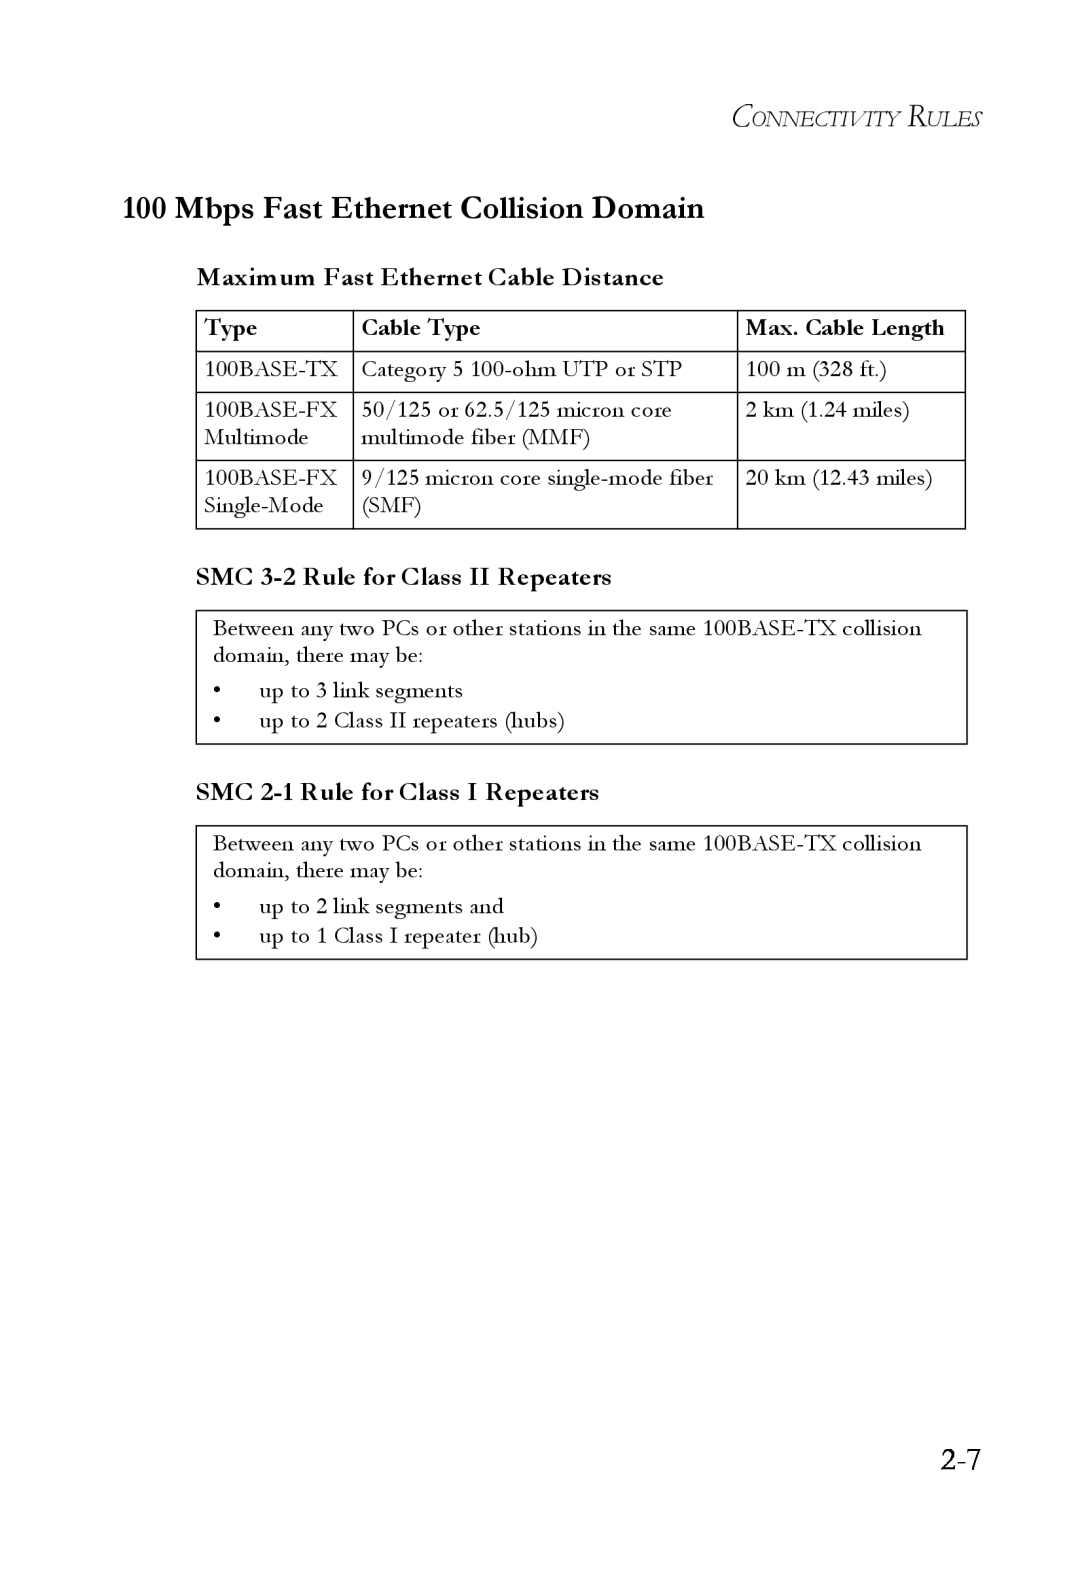 SMC Networks SMC8624T manual Mbps Fast Ethernet Collision Domain, Maximum Fast Ethernet Cable Distance 